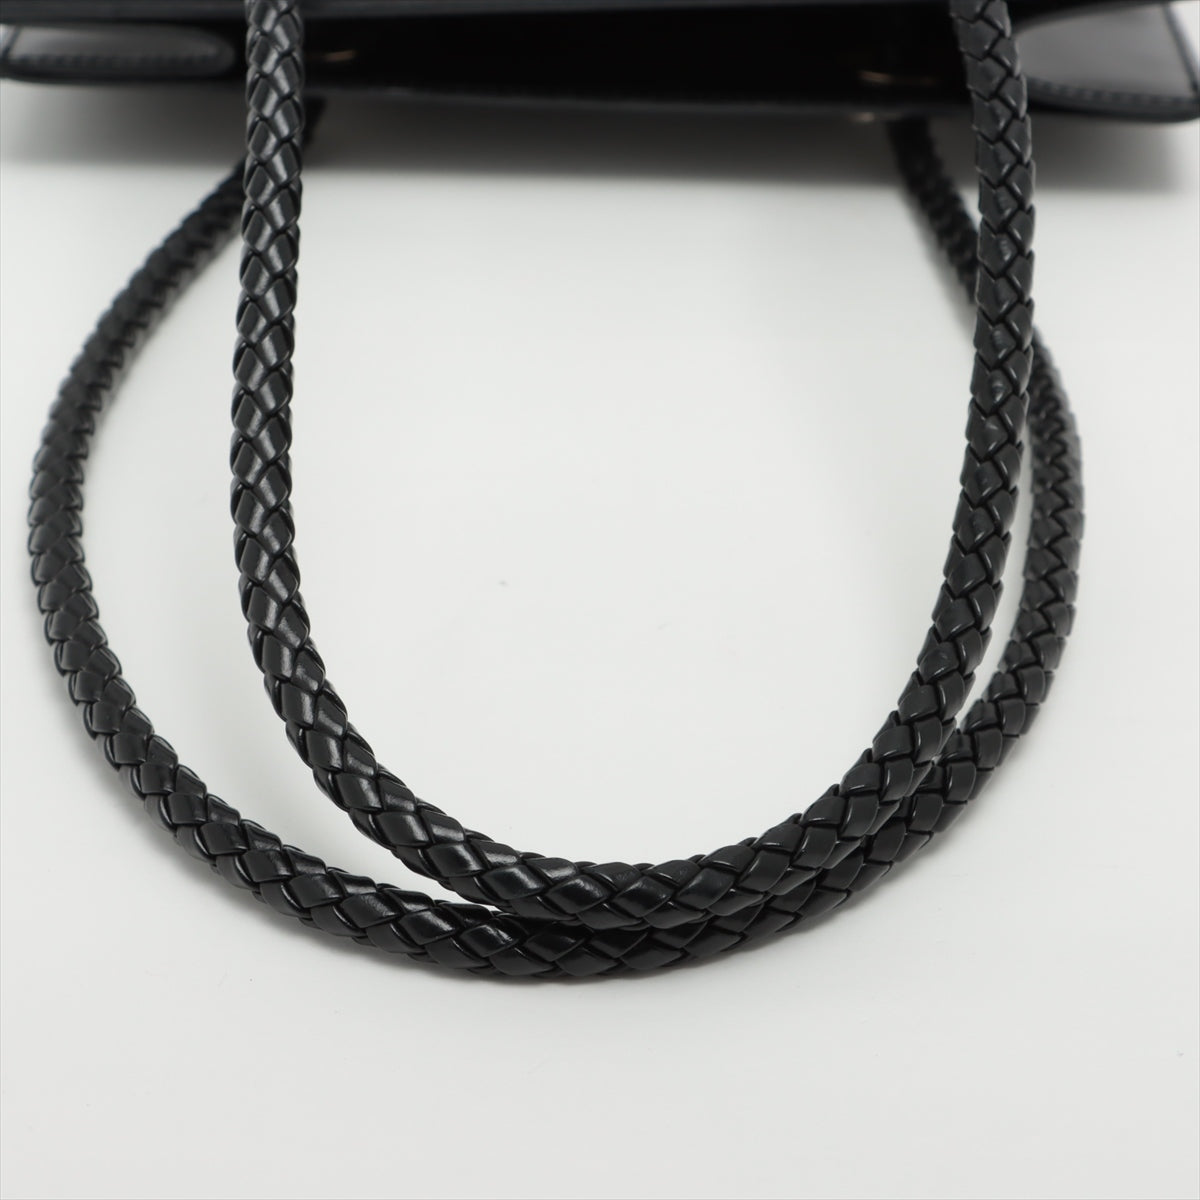 Cartier Panthère Leather Shoulder Bag Black open papers